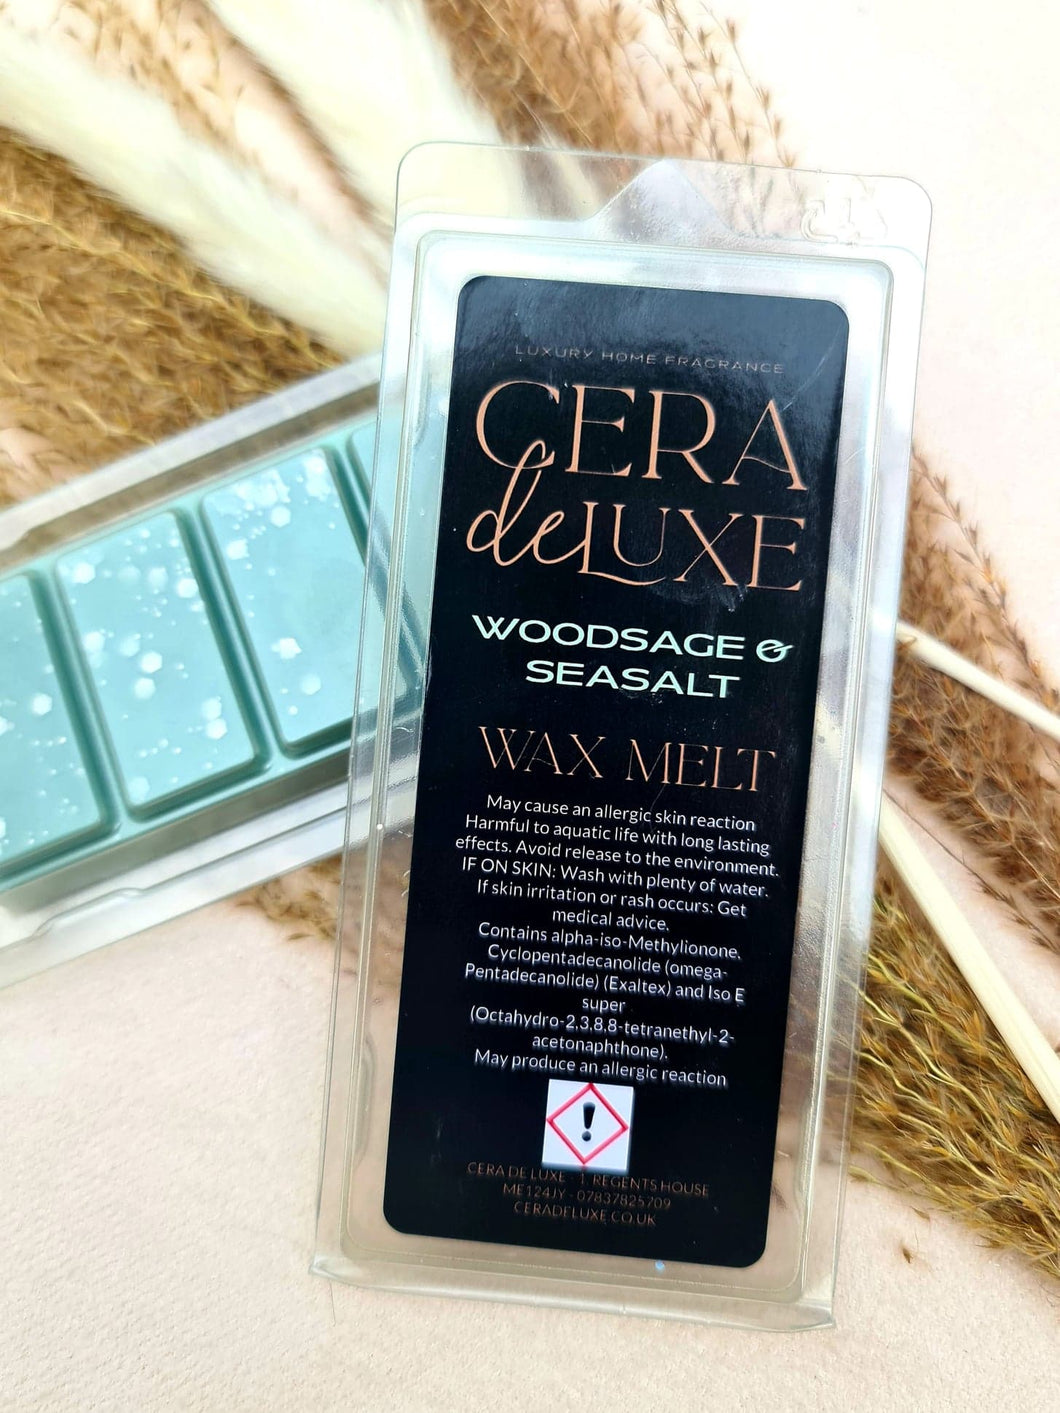 WOODSAGE & SEASALT - Cera De Luxe - Luxury Home Fragrance